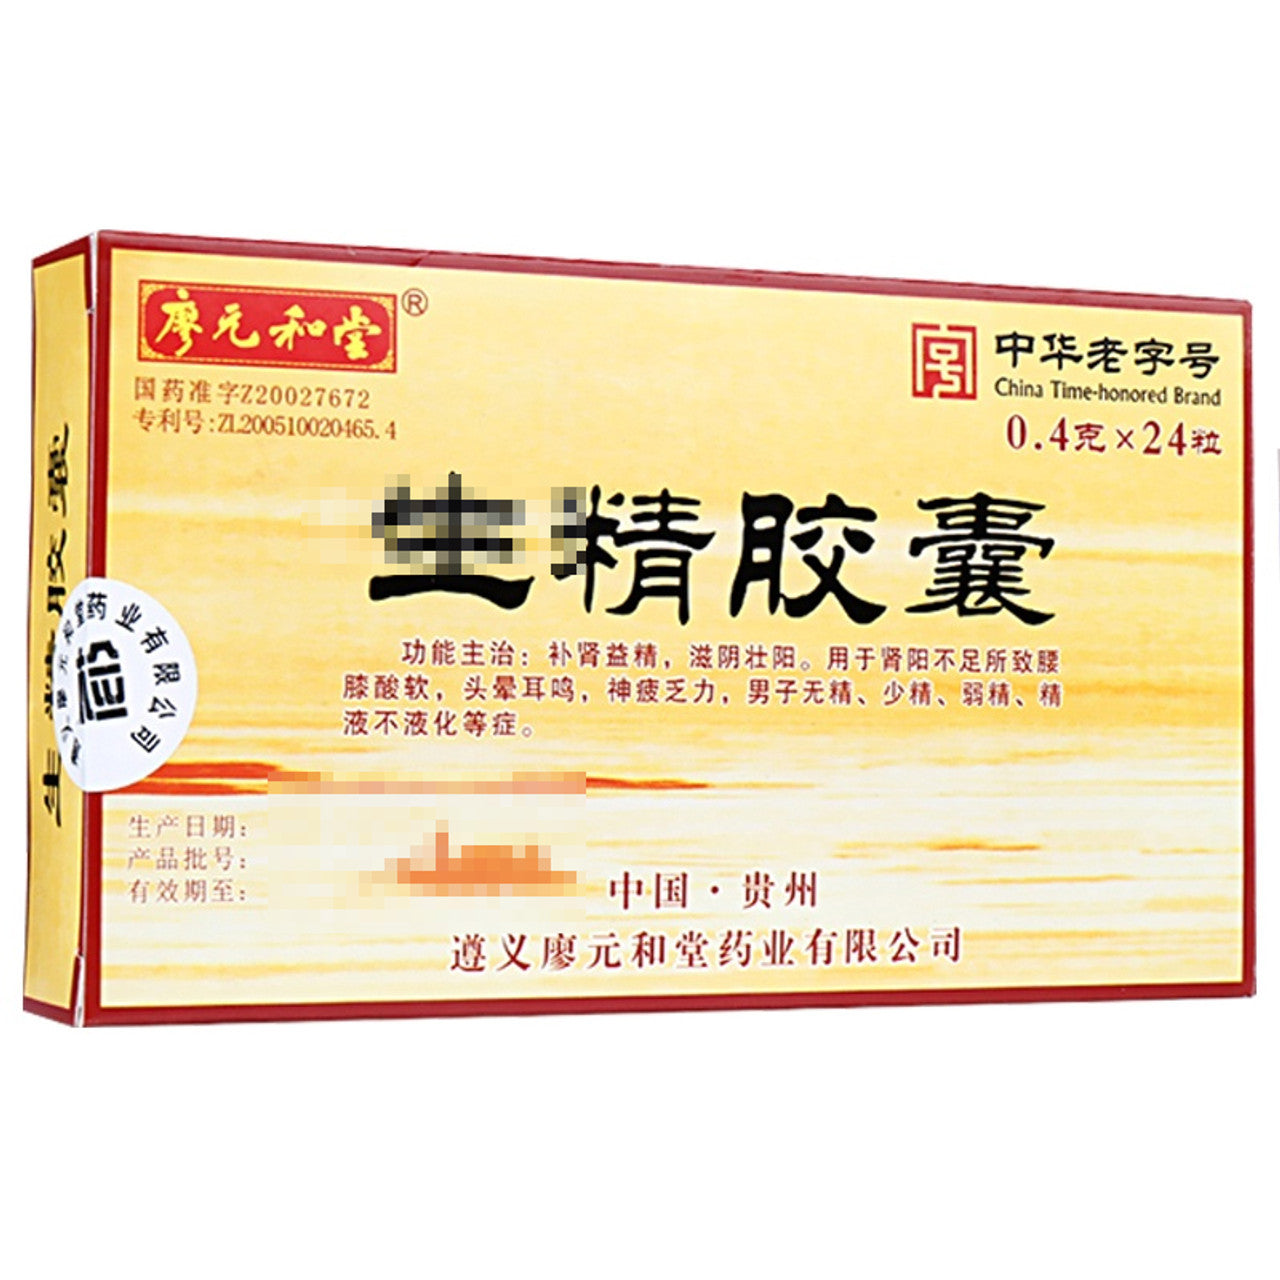 Herbal Supplement Shengjing Capsule / Shengjing Jiaonang / Sheng Jing Capsule / Sheng Jing Jiaonang